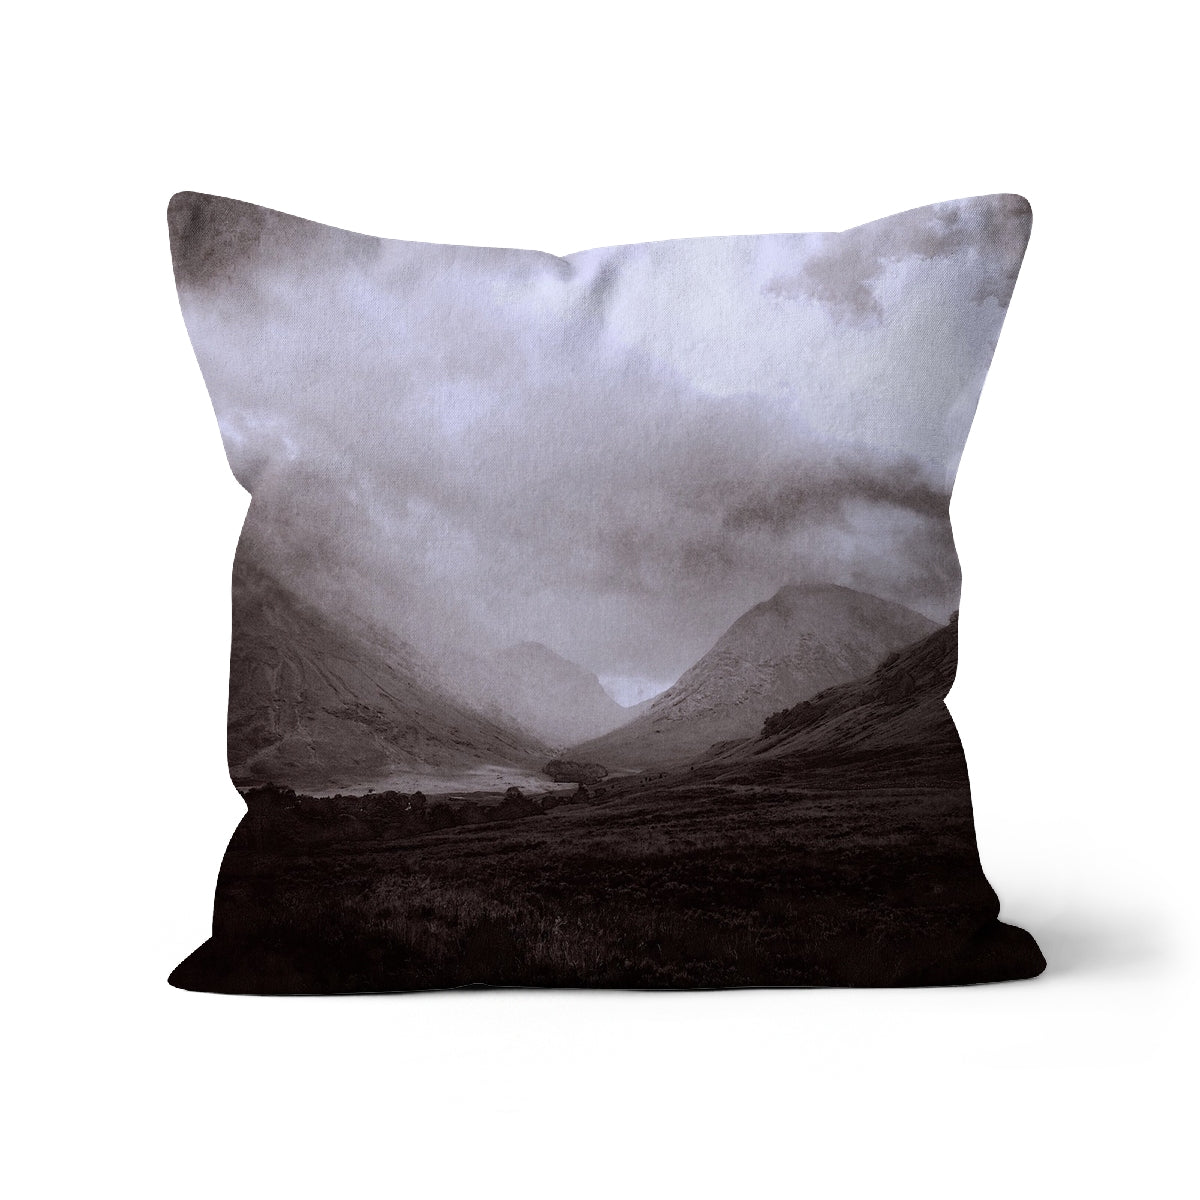 Glencoe Mist Art Gifts Cushion-Cushions-Glencoe Art Gallery-Canvas-16"x16"-Paintings, Prints, Homeware, Art Gifts From Scotland By Scottish Artist Kevin Hunter